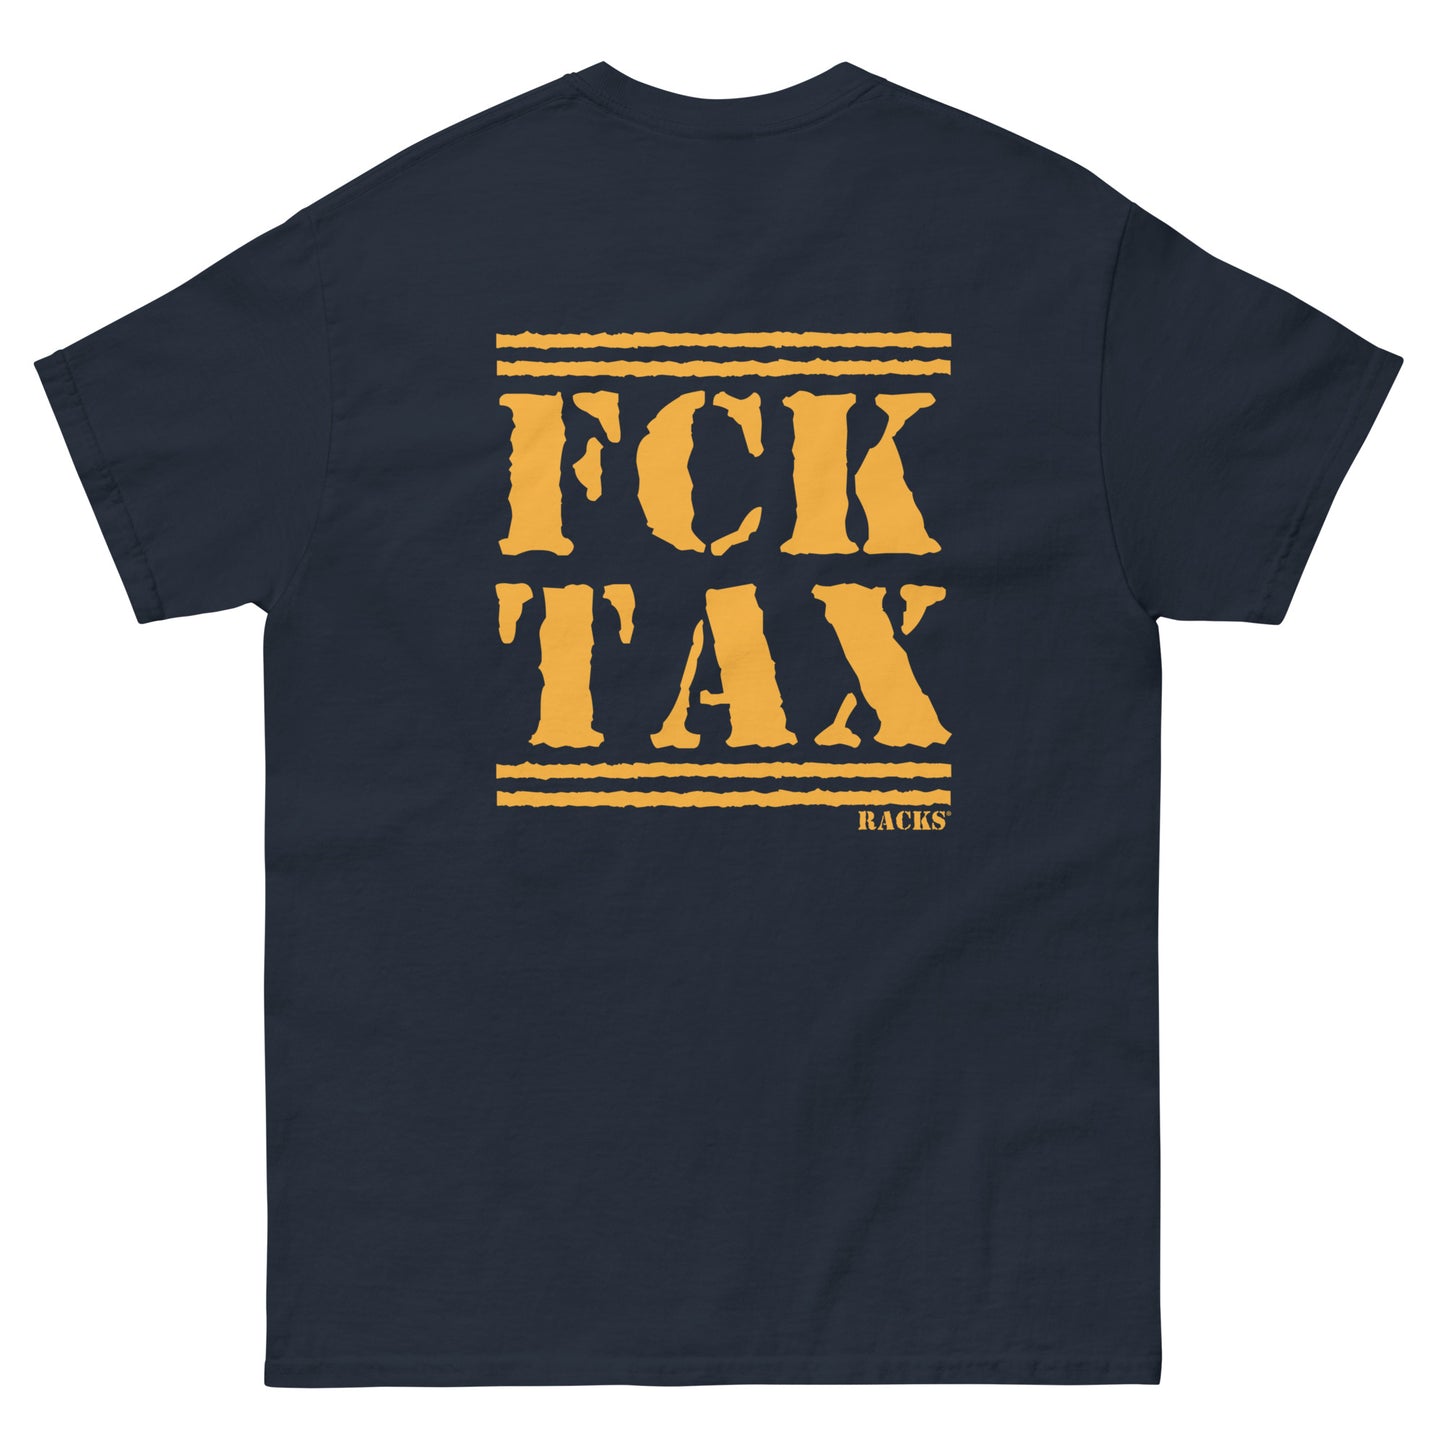 Camiseta FCK TAX Army Amarillo